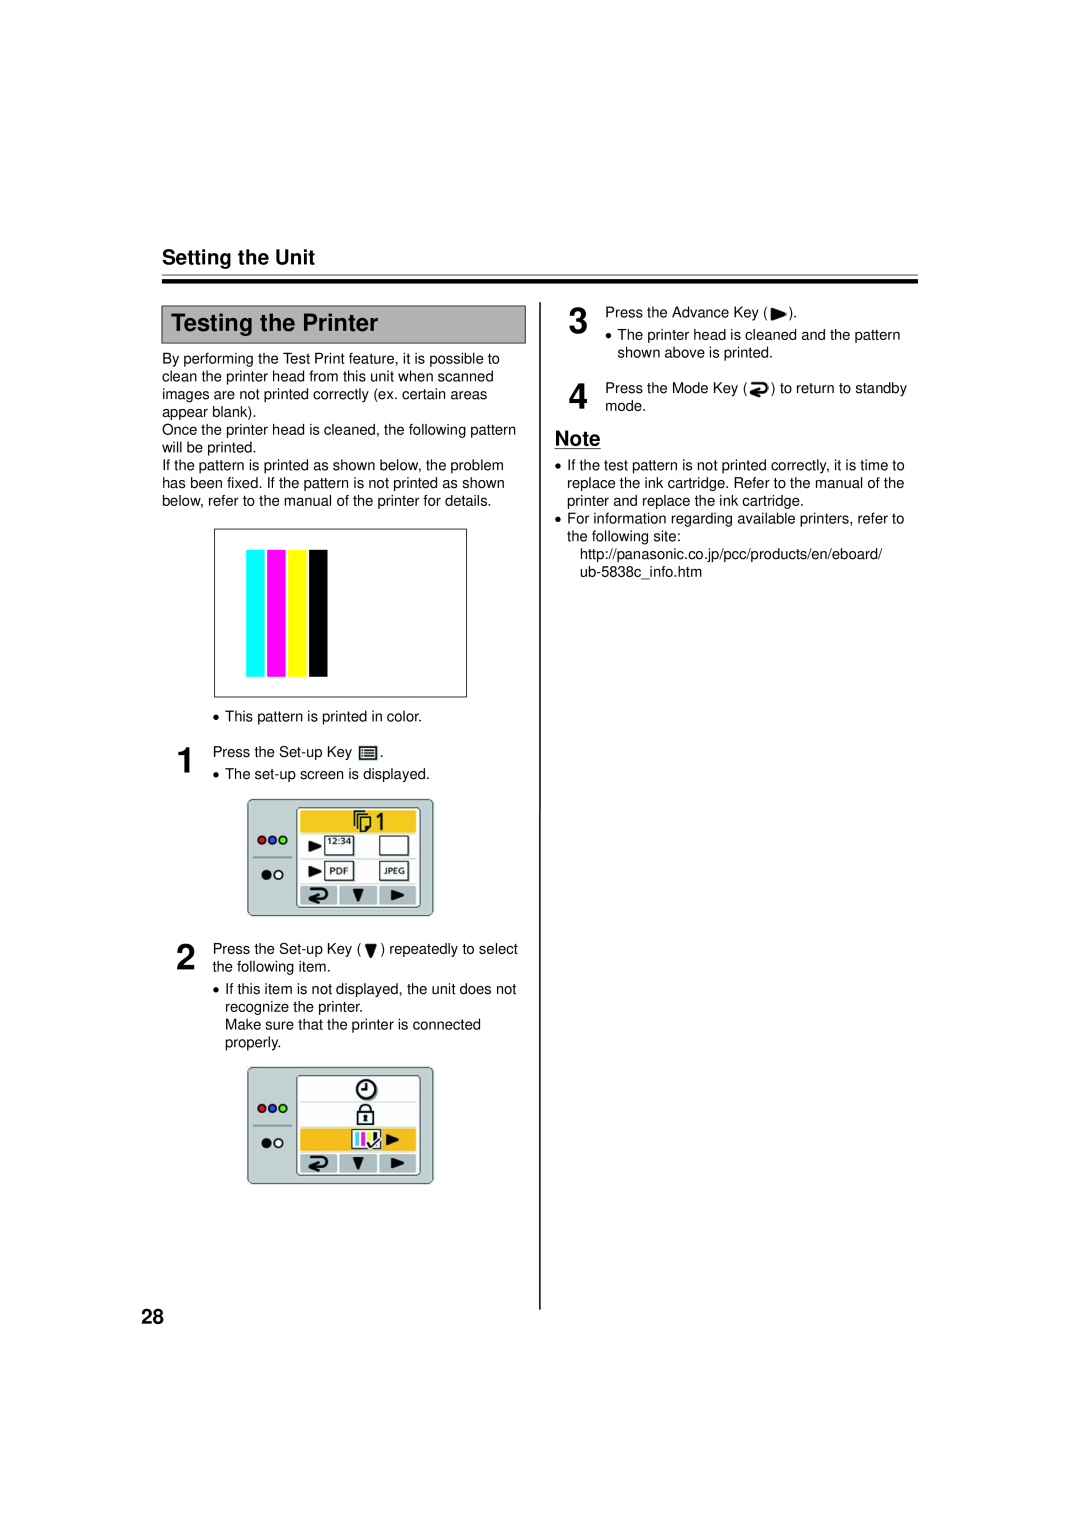 Panasonic UB-5838C, UB-5338C operating instructions Testing the Printer, Setting the Unit 